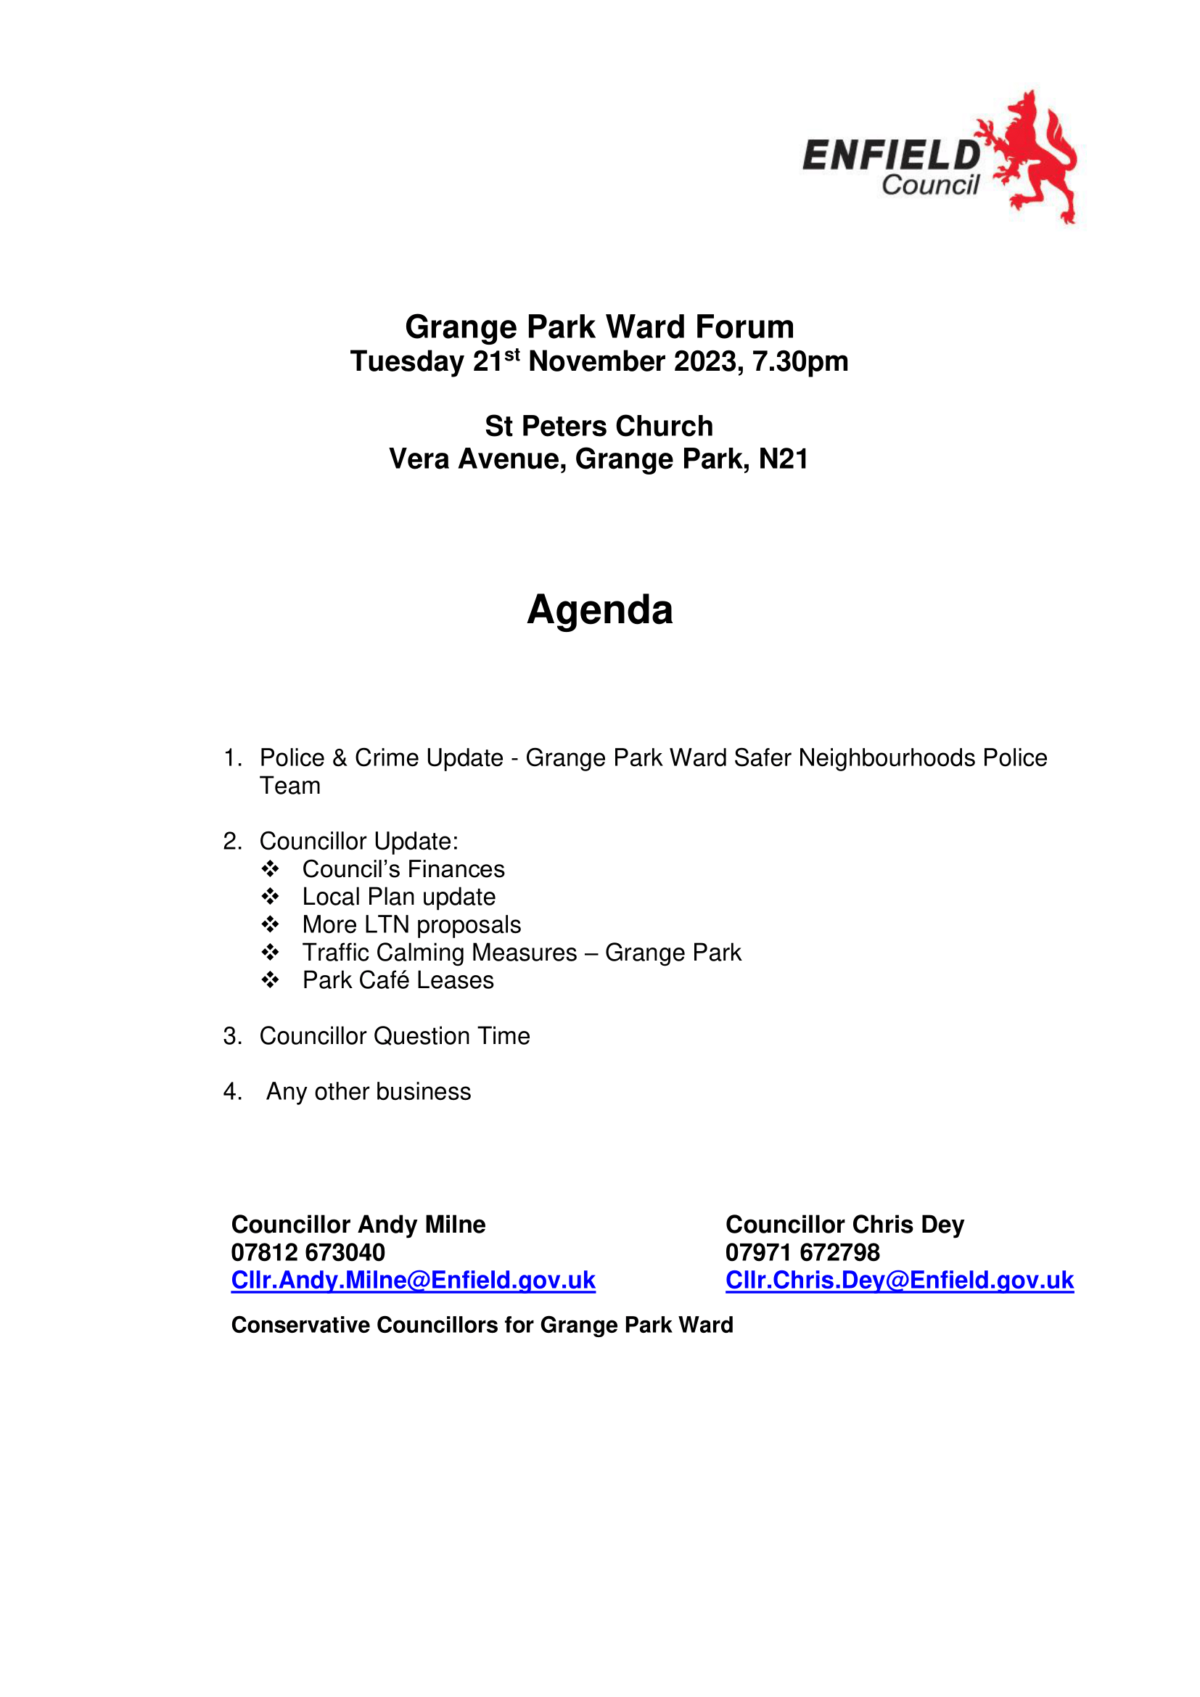 Grange Park Ward Forum, Tuesday 21 November 2023 @7.30pm St Peters Church, Vera Avenue